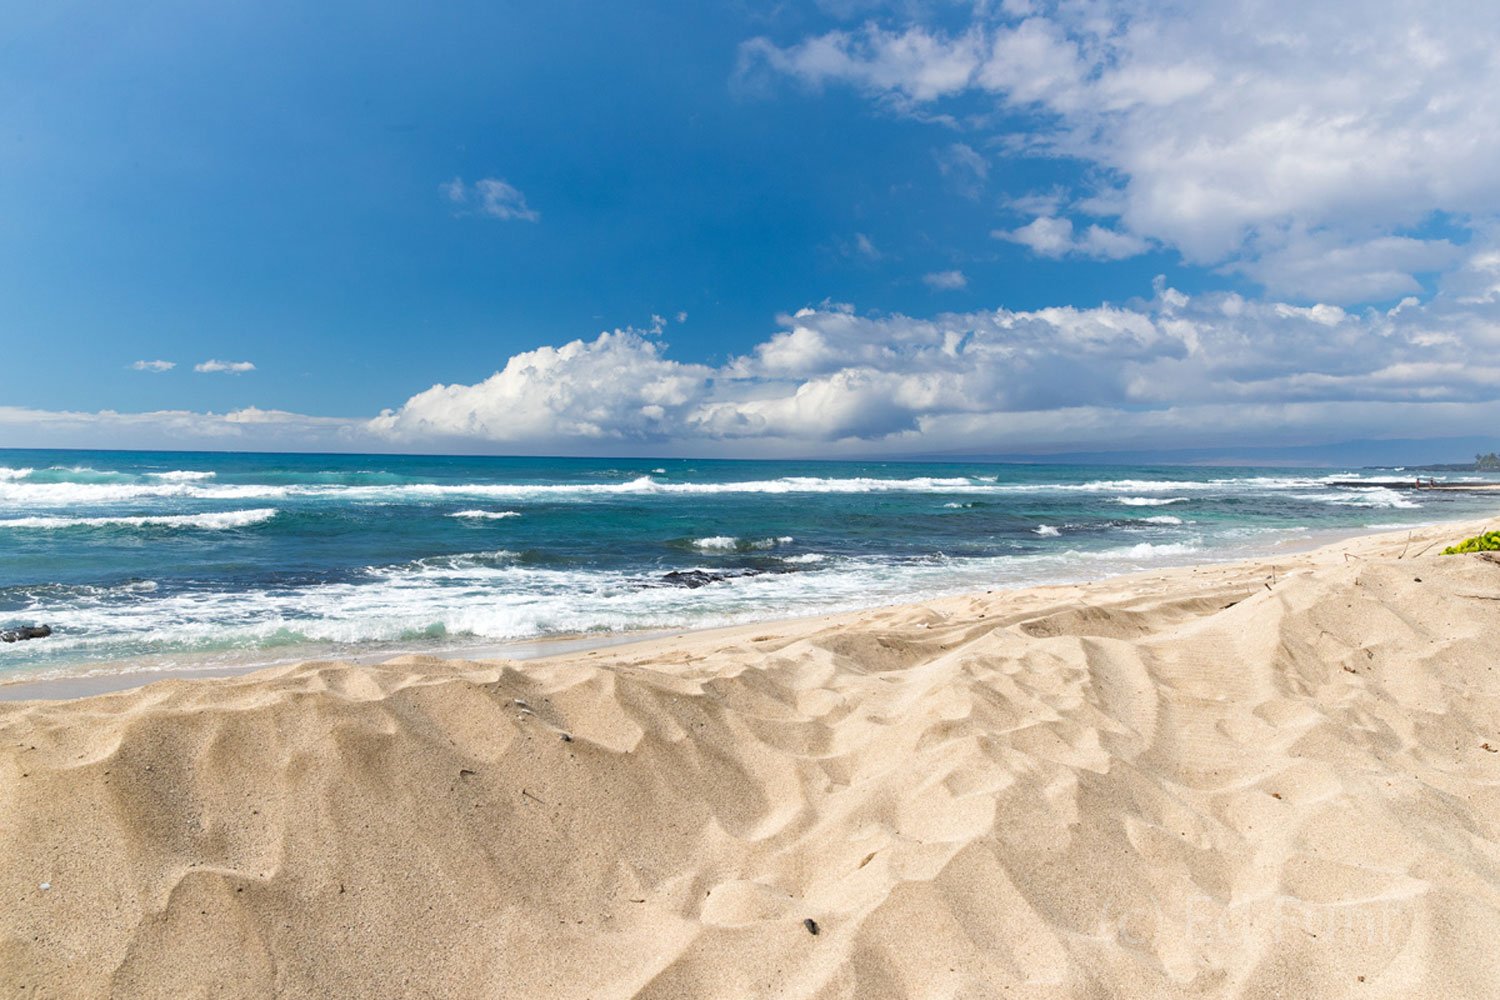 The white sand beaches between Kona and Kohala are world famous.